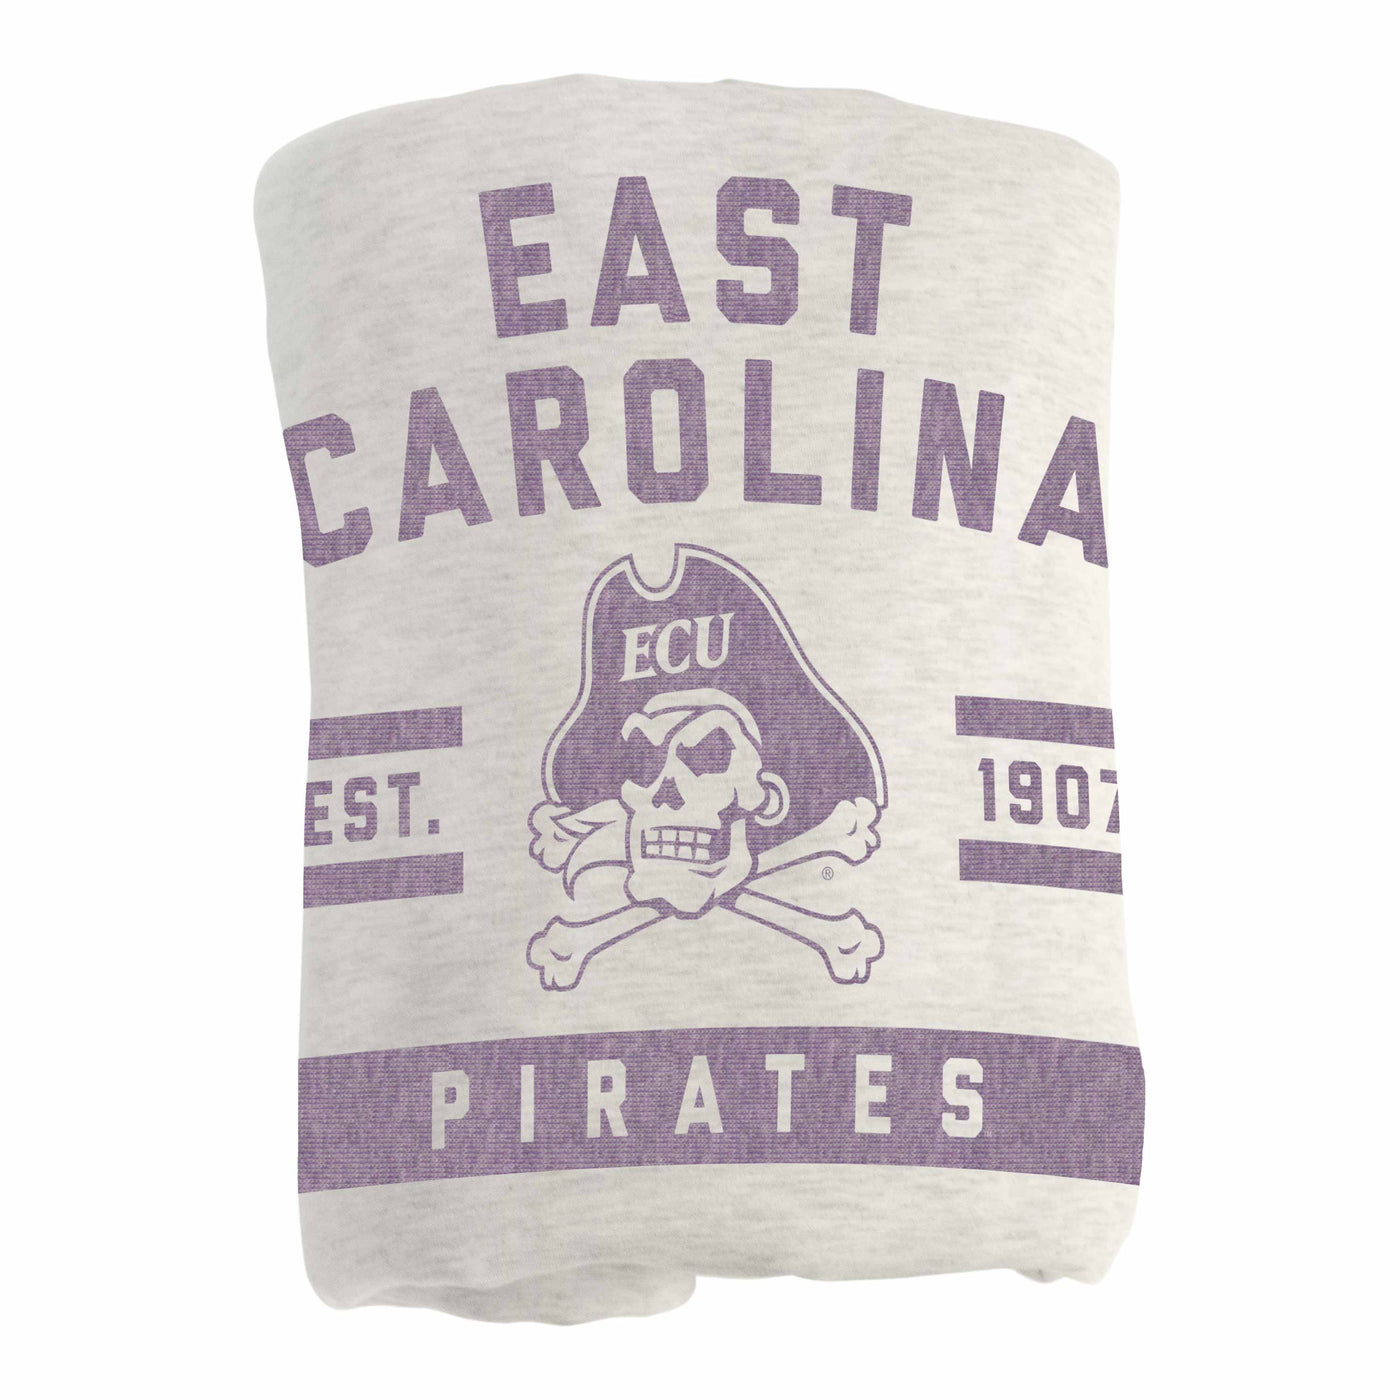 East Carolina Oatmeal Sweatshirt Blanket